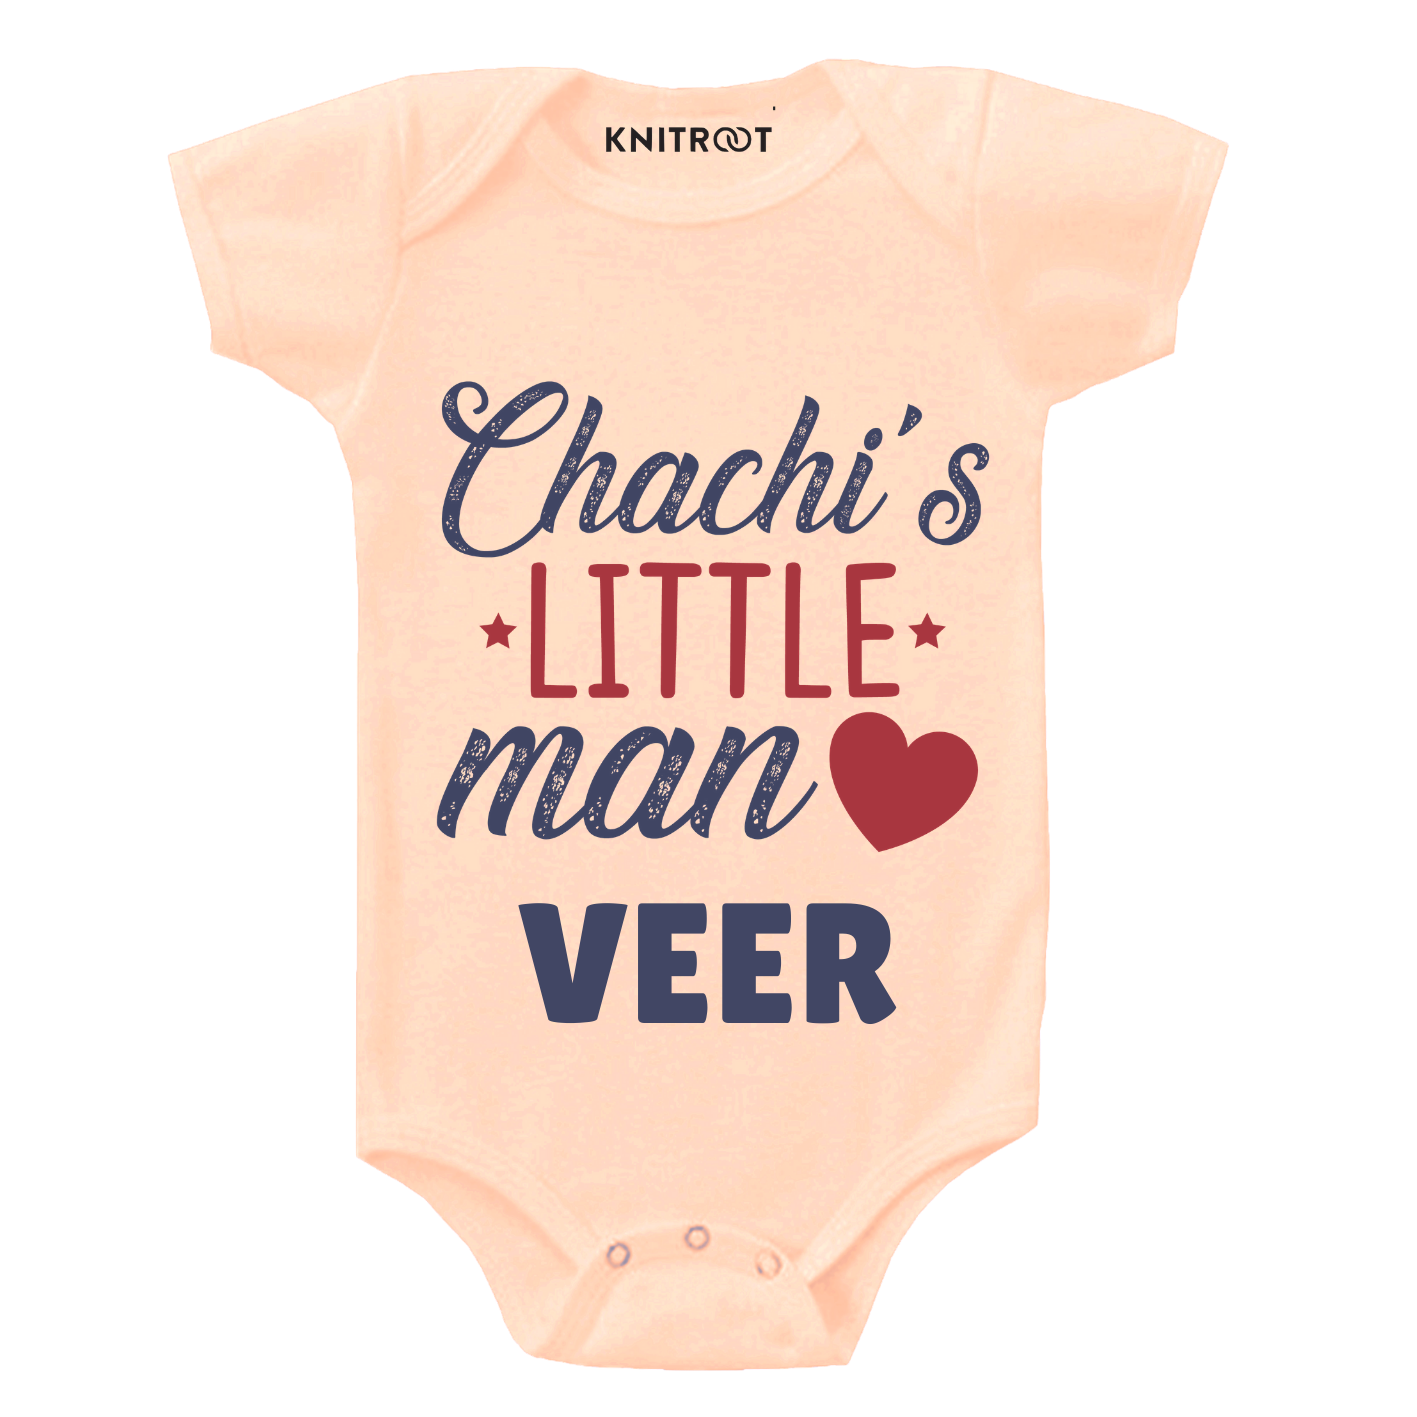 Chachi's Little Man